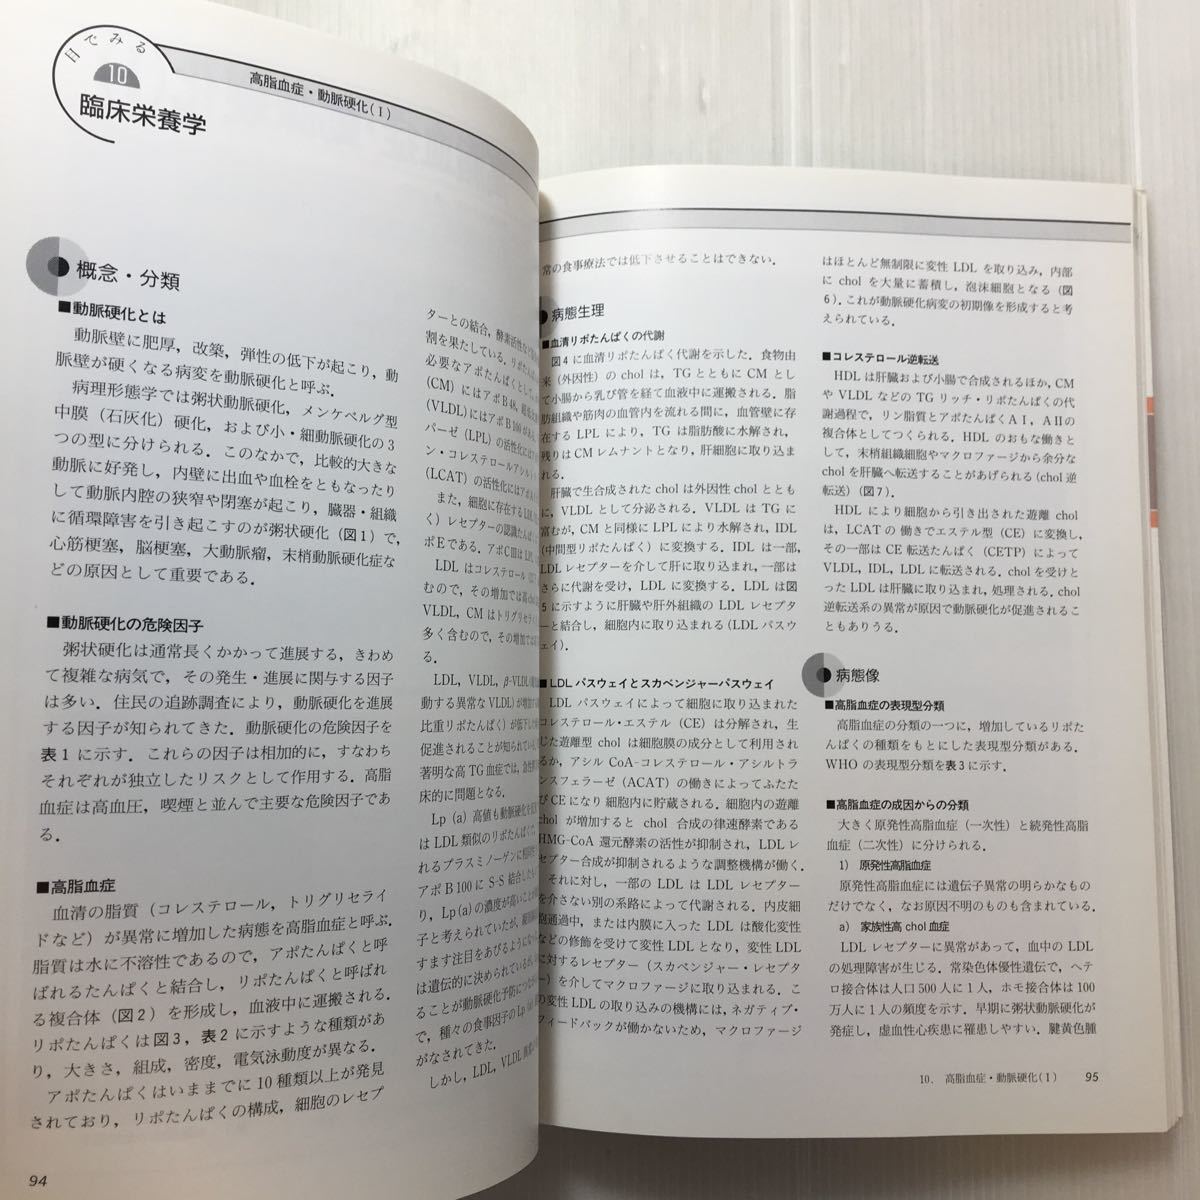 zaa-185♪目でみる臨床栄養学 単行本 1995/10/1 医歯薬出版株式会社